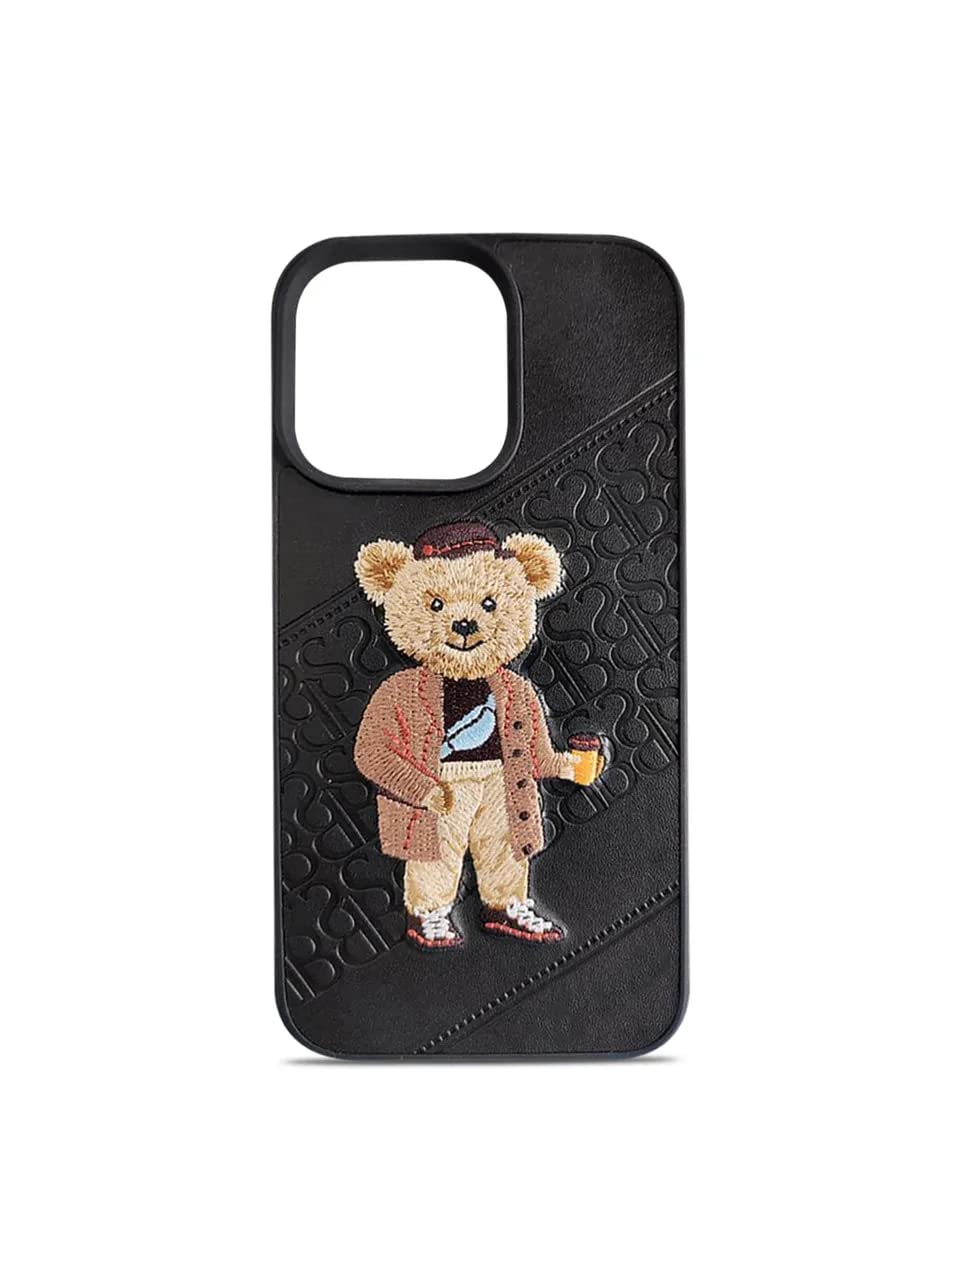 iPhone Luxury Santa Barbara Leather Bear Series Back Cover